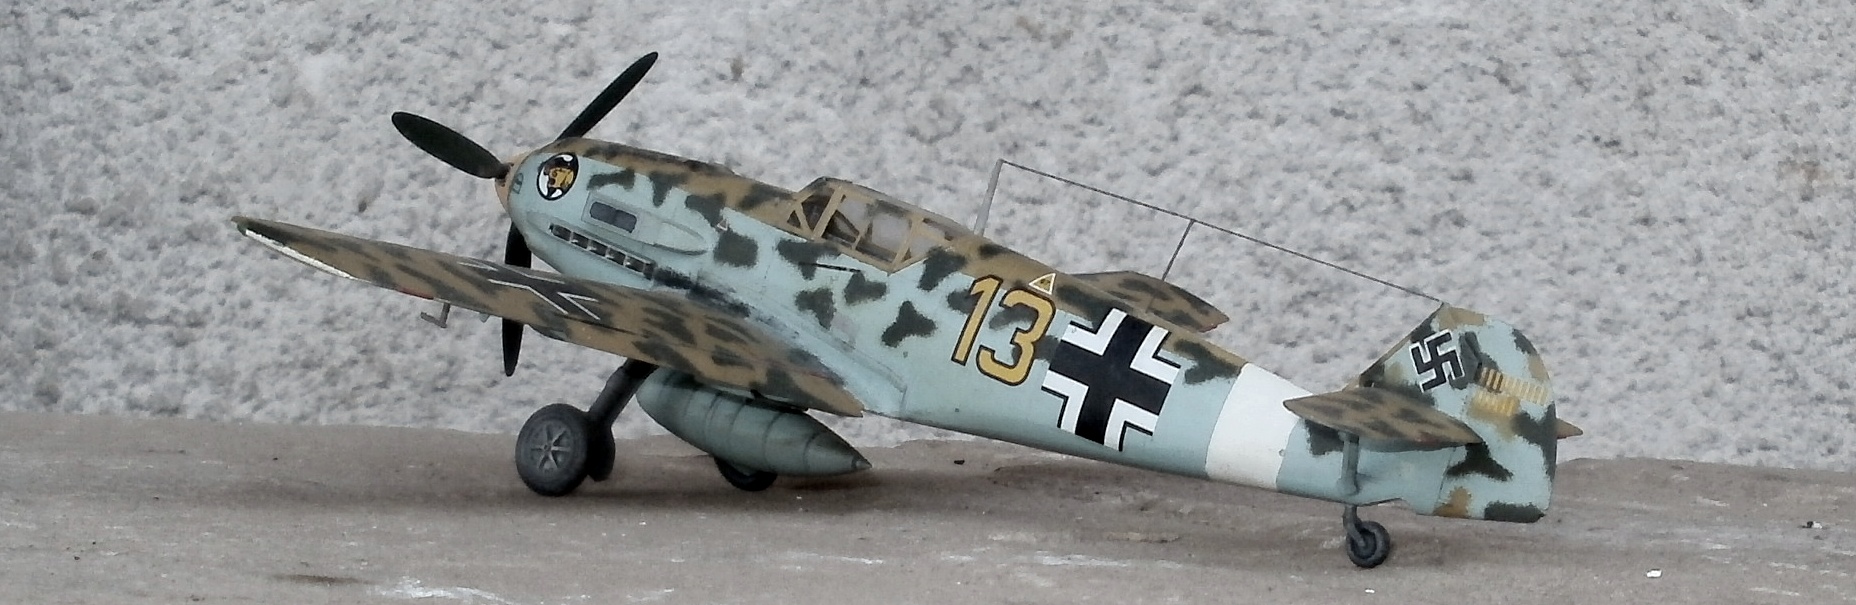 Bf 109 der 3. Gruppe des Jagdgeschwaders 27. 1942 in Lybien - Nord Afrika - Hasegawa 1/48